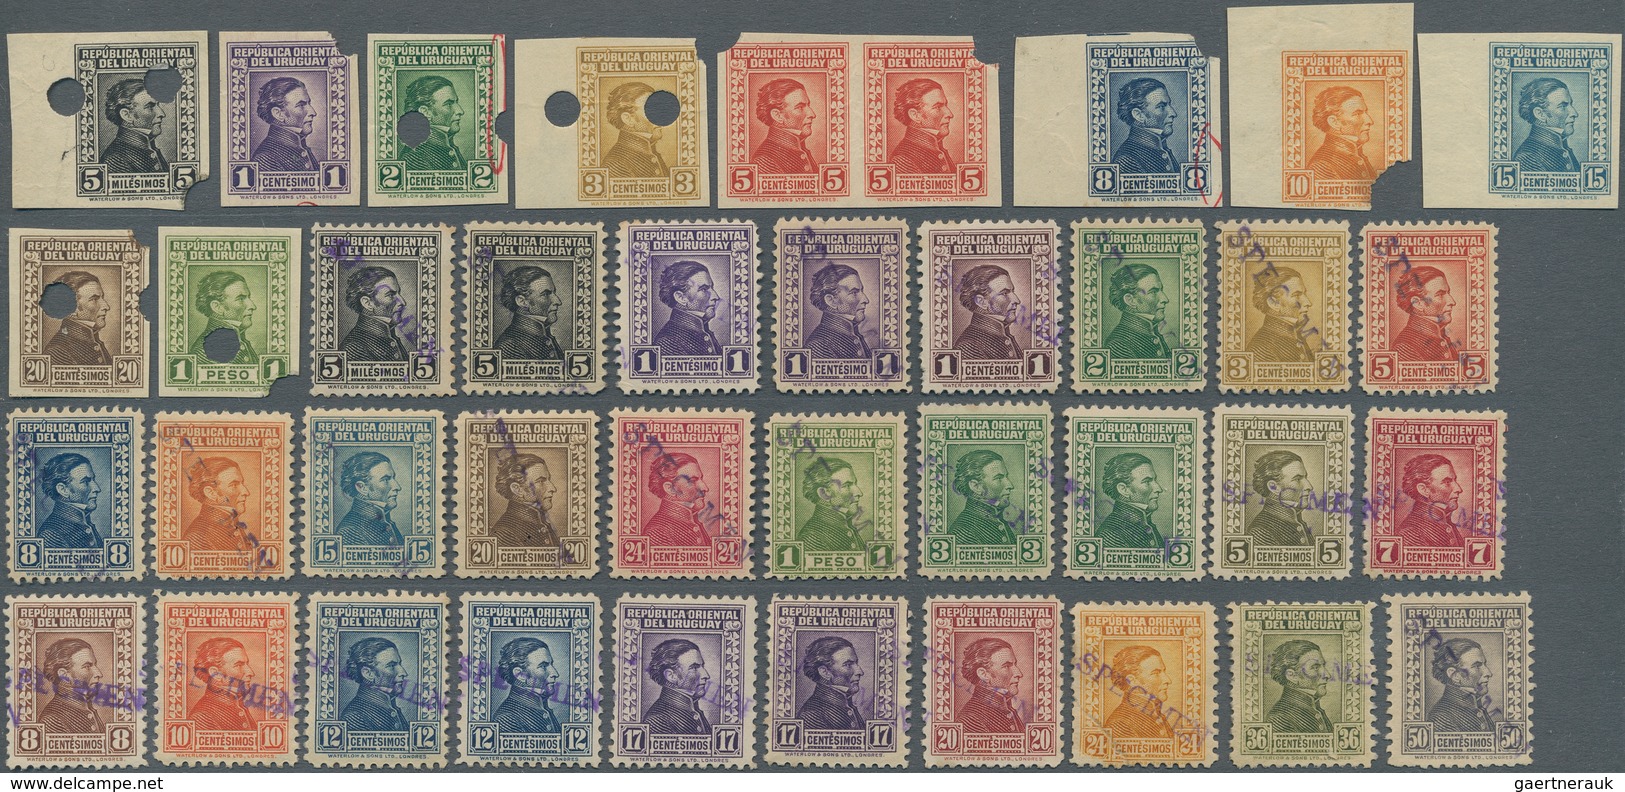 Uruguay: 1928/1936, General José Gervasio Artigas, set of 80 specimen/essays (one stamp damaged, par